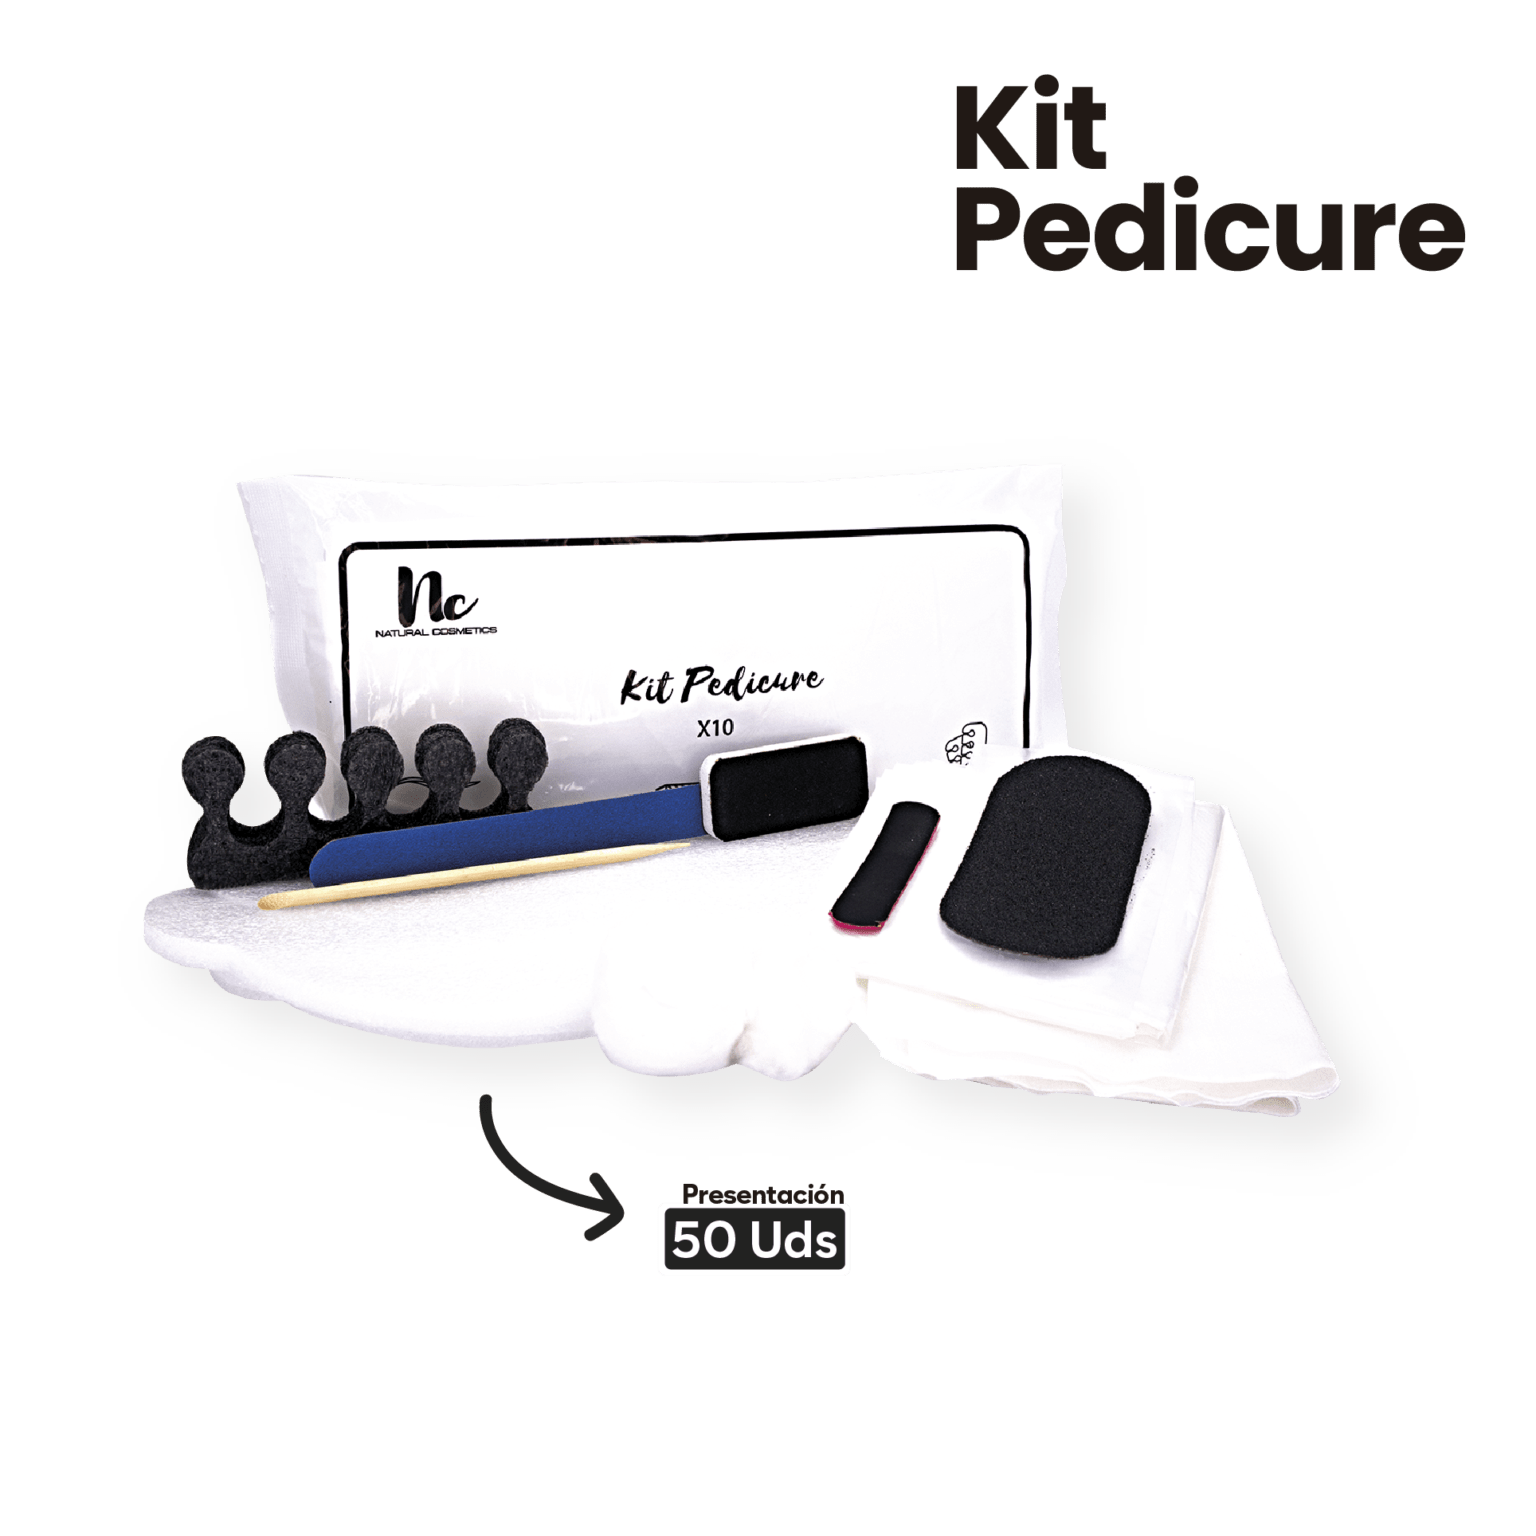 kit pedicure@300x